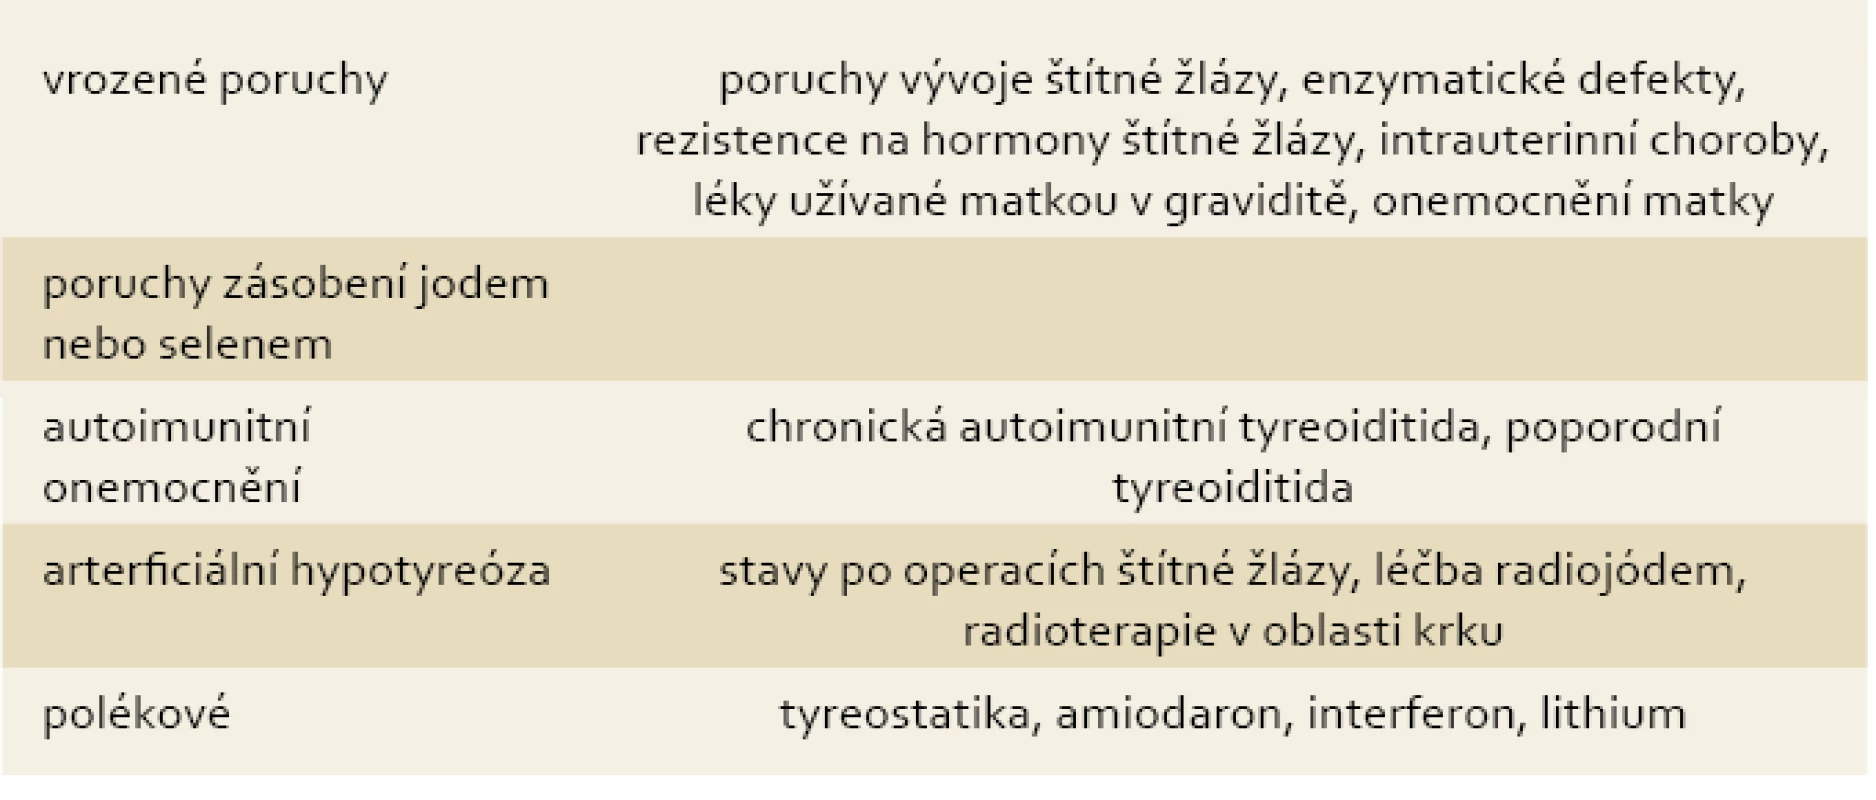 Příčiny hypotyreózy.
Tab. 1. Causes of hypothyroidism.